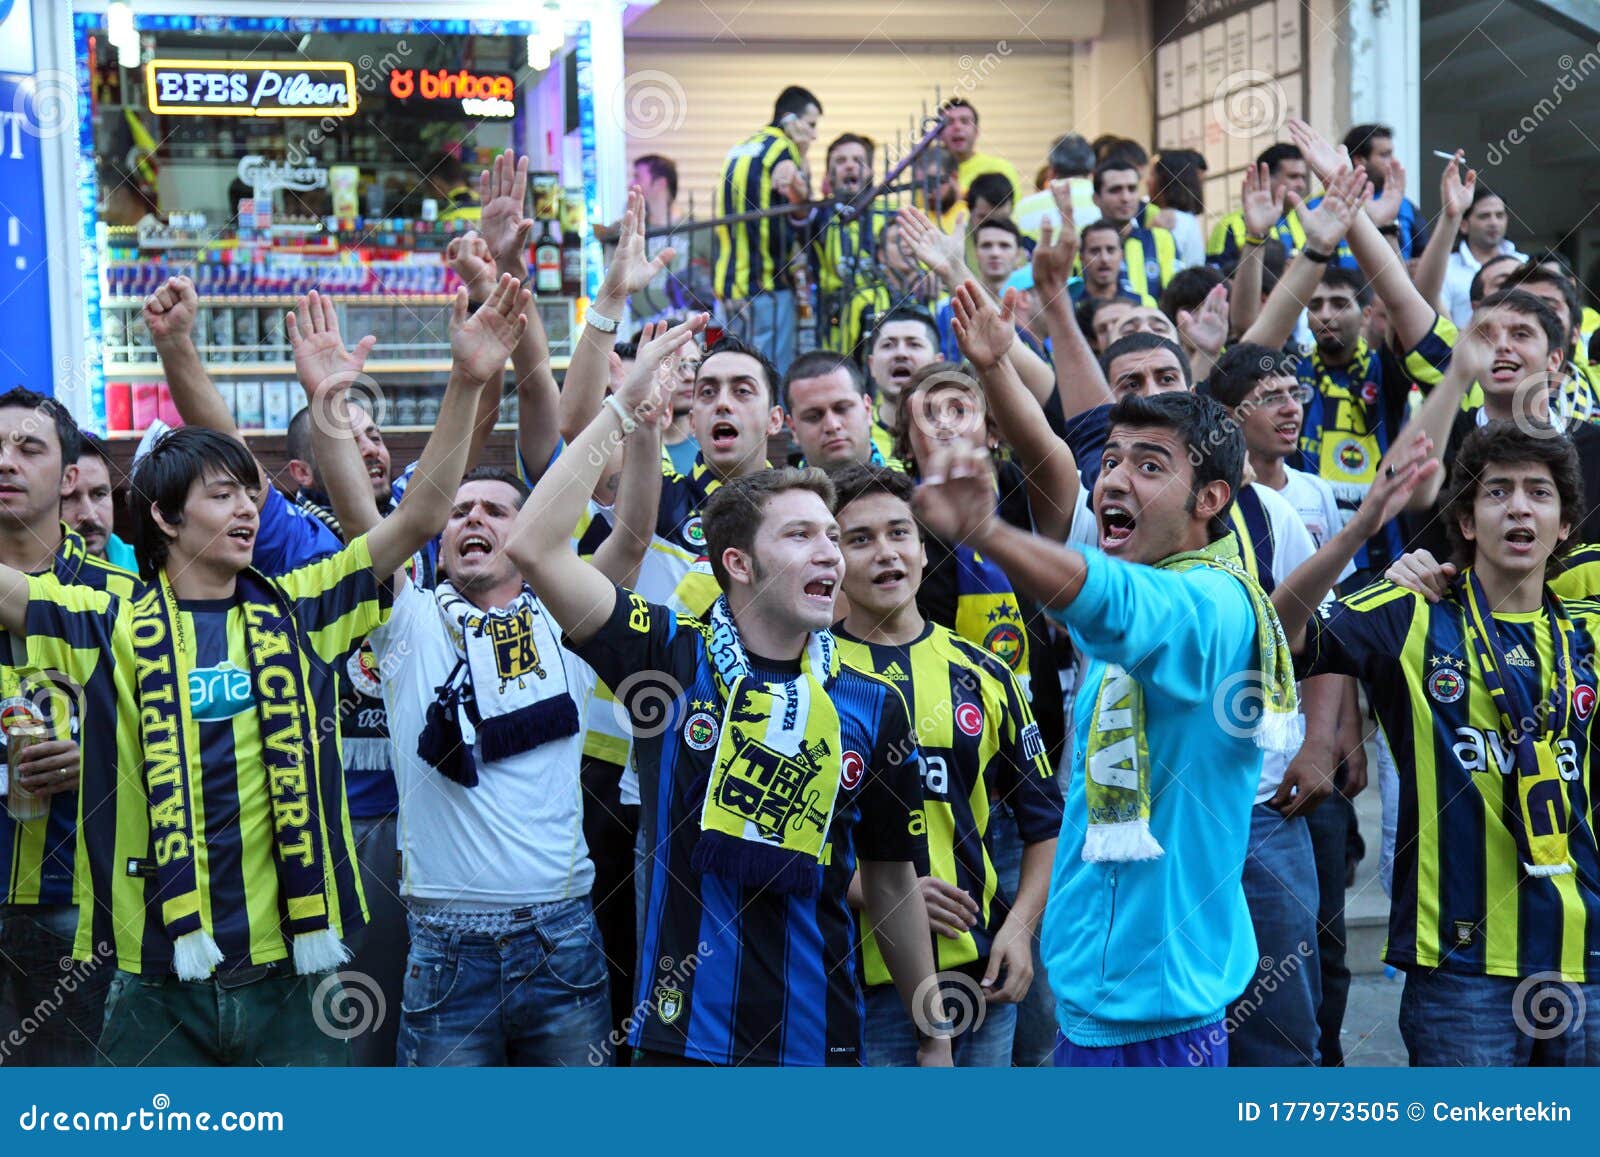 Adana Demirspor vs Fenerbahçe: A Clash of Titans